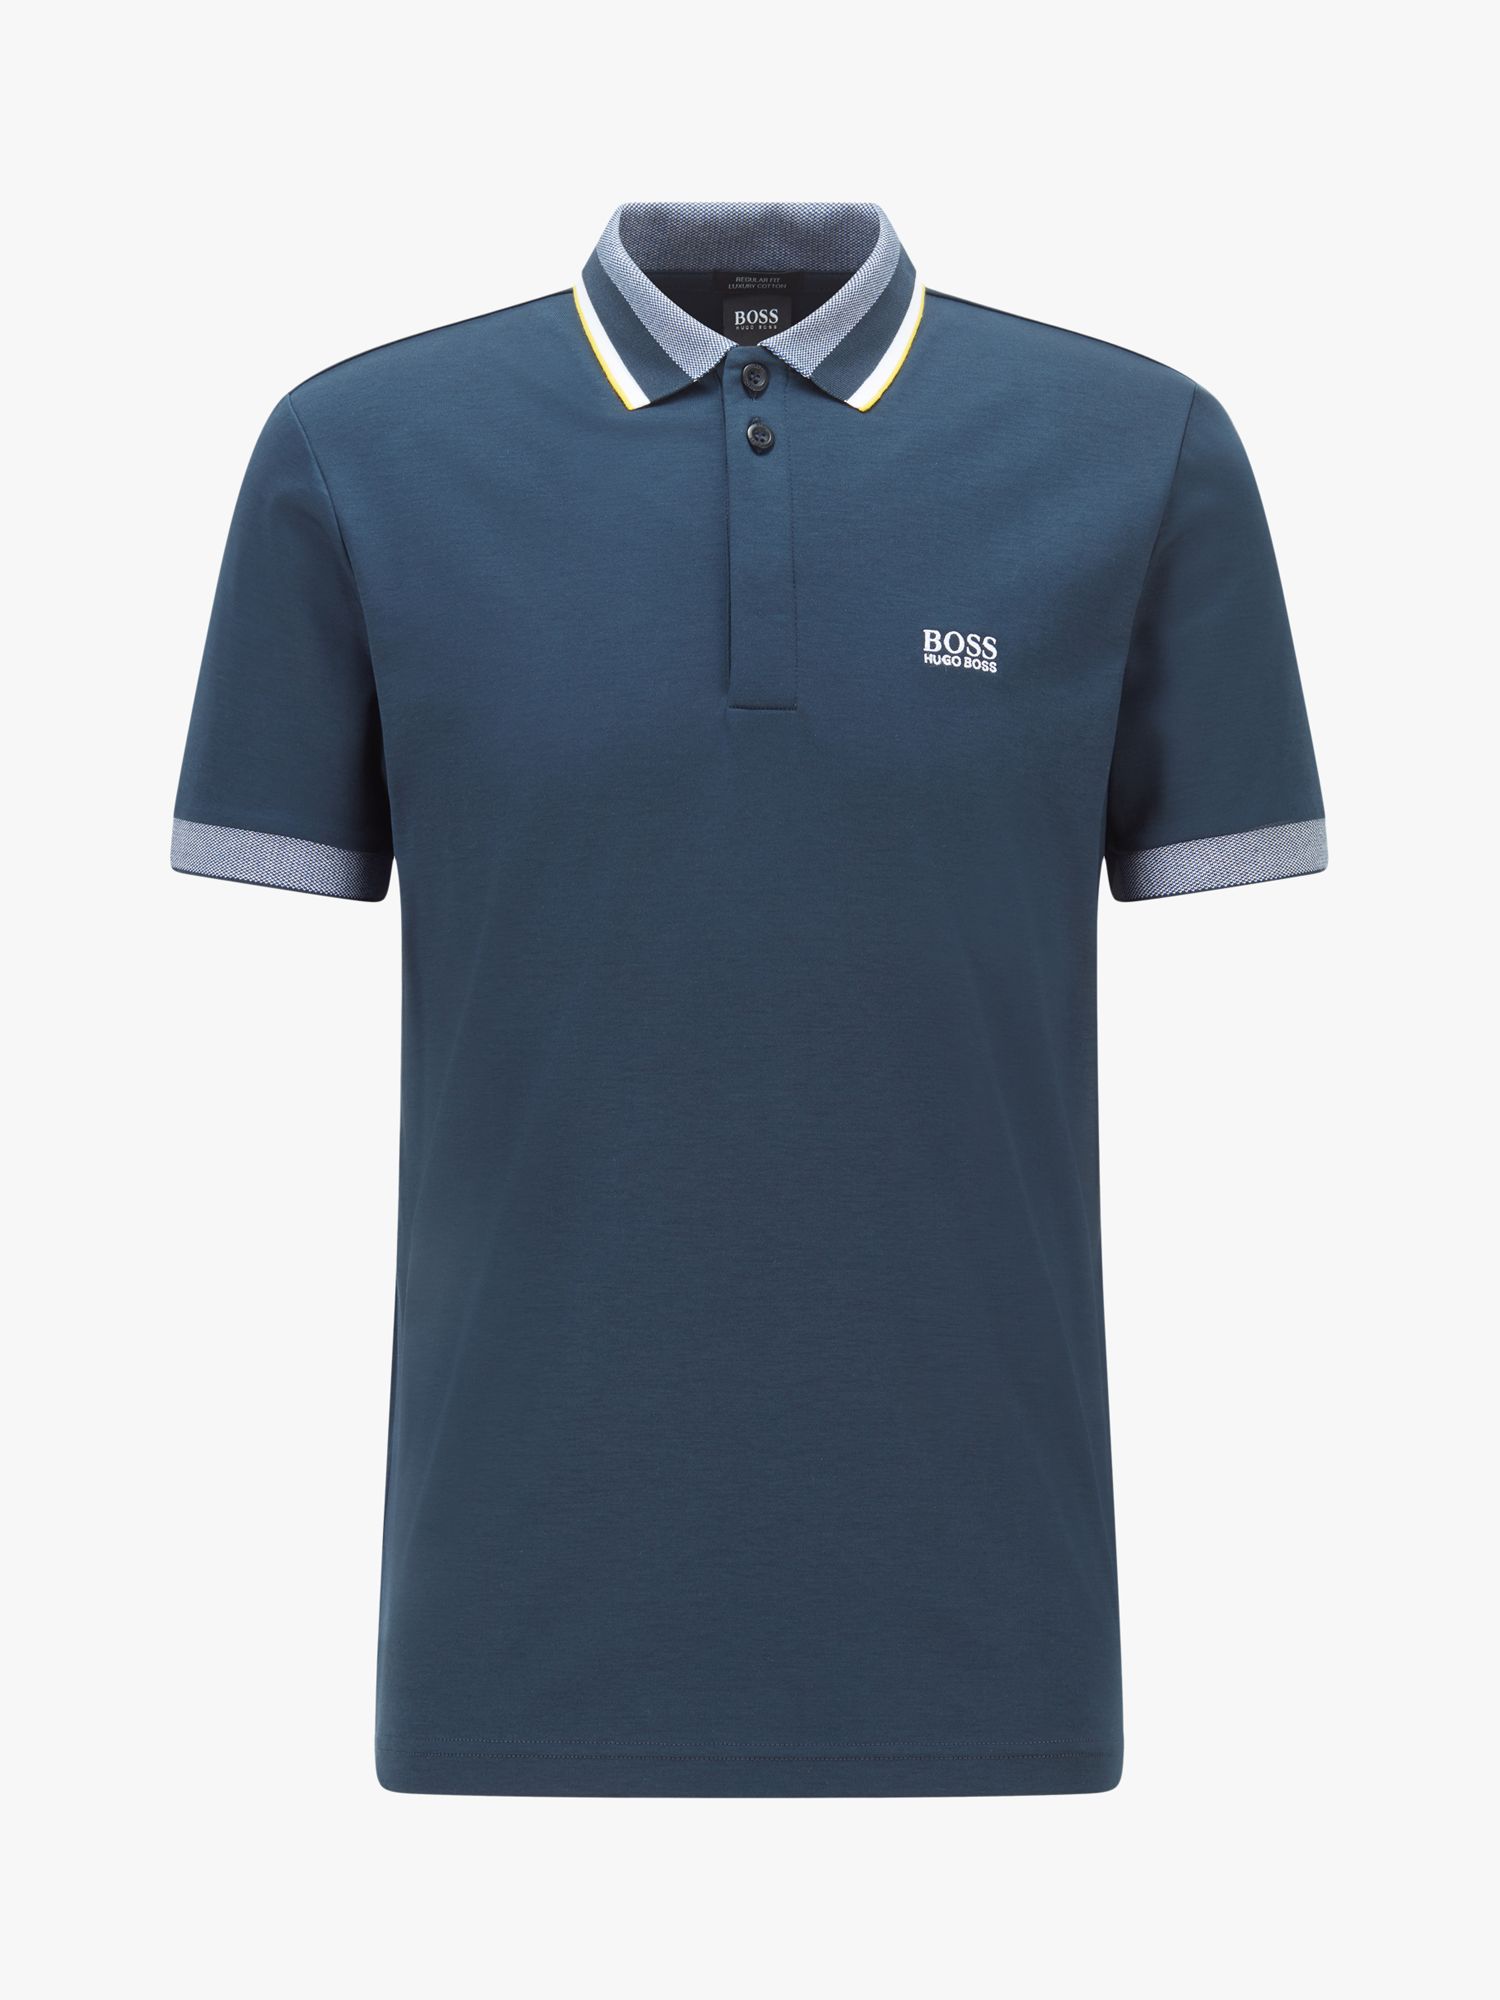 BOSS Paddy 1 Regular Fit Polo Shirt, Navy at John Lewis & Partners